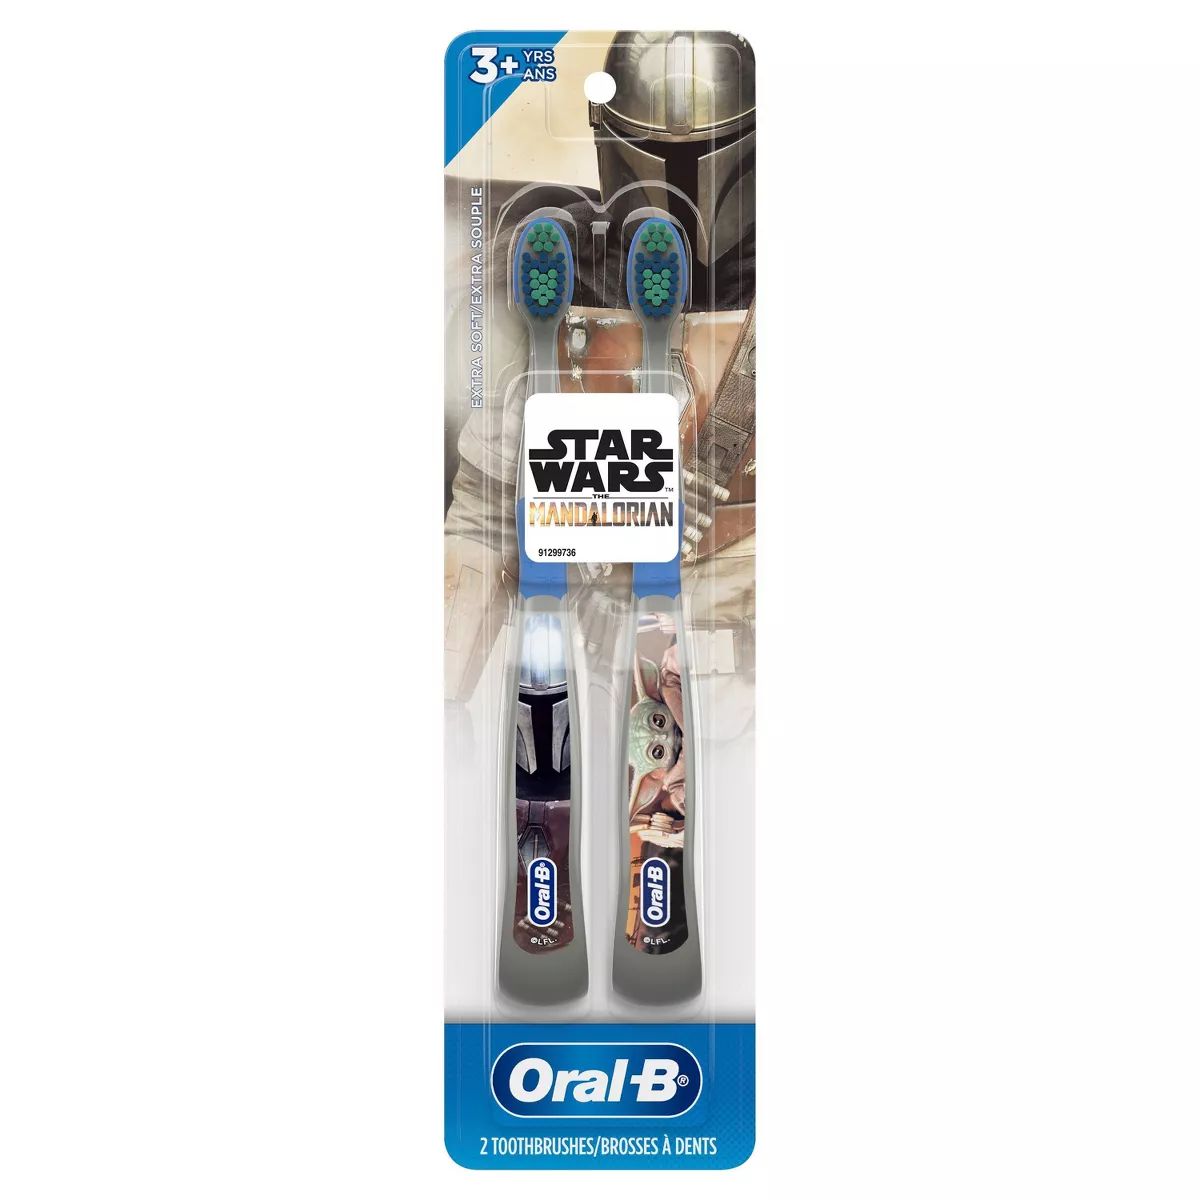 Oral-B Kids Manual Toothbrush featuring Star Wars: The Mandalorian - Extra Soft Bristles - 2ct | Target